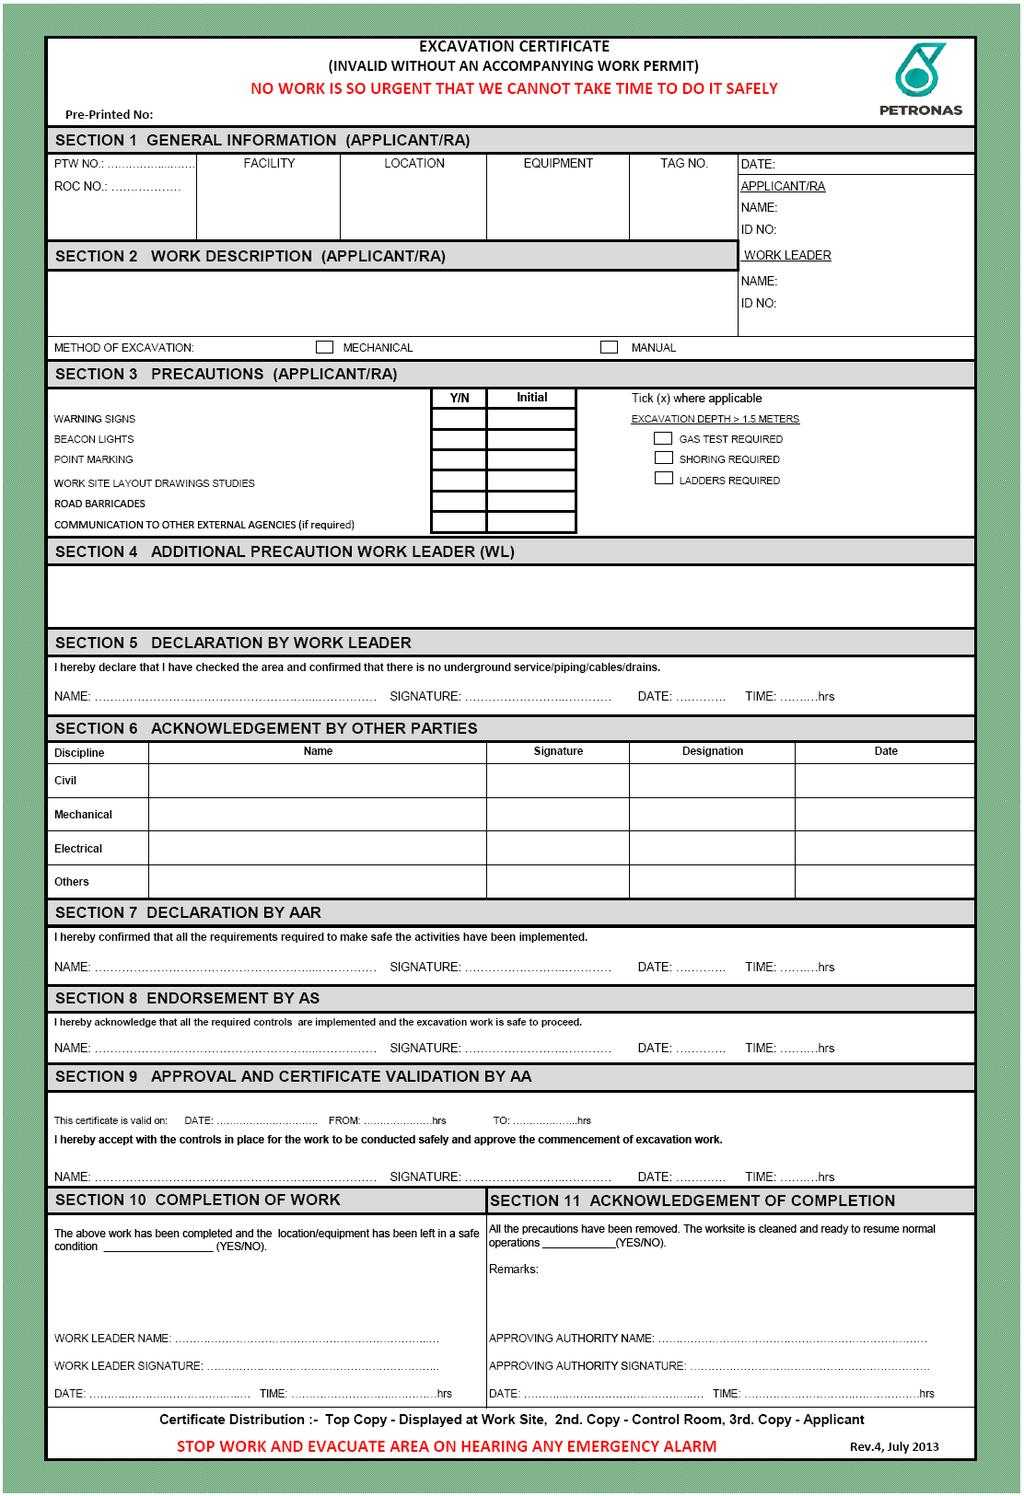 Petronas Carigali Permit To Work Procedure Petronas Carigali Inside Electrical Isolation Certificate Template